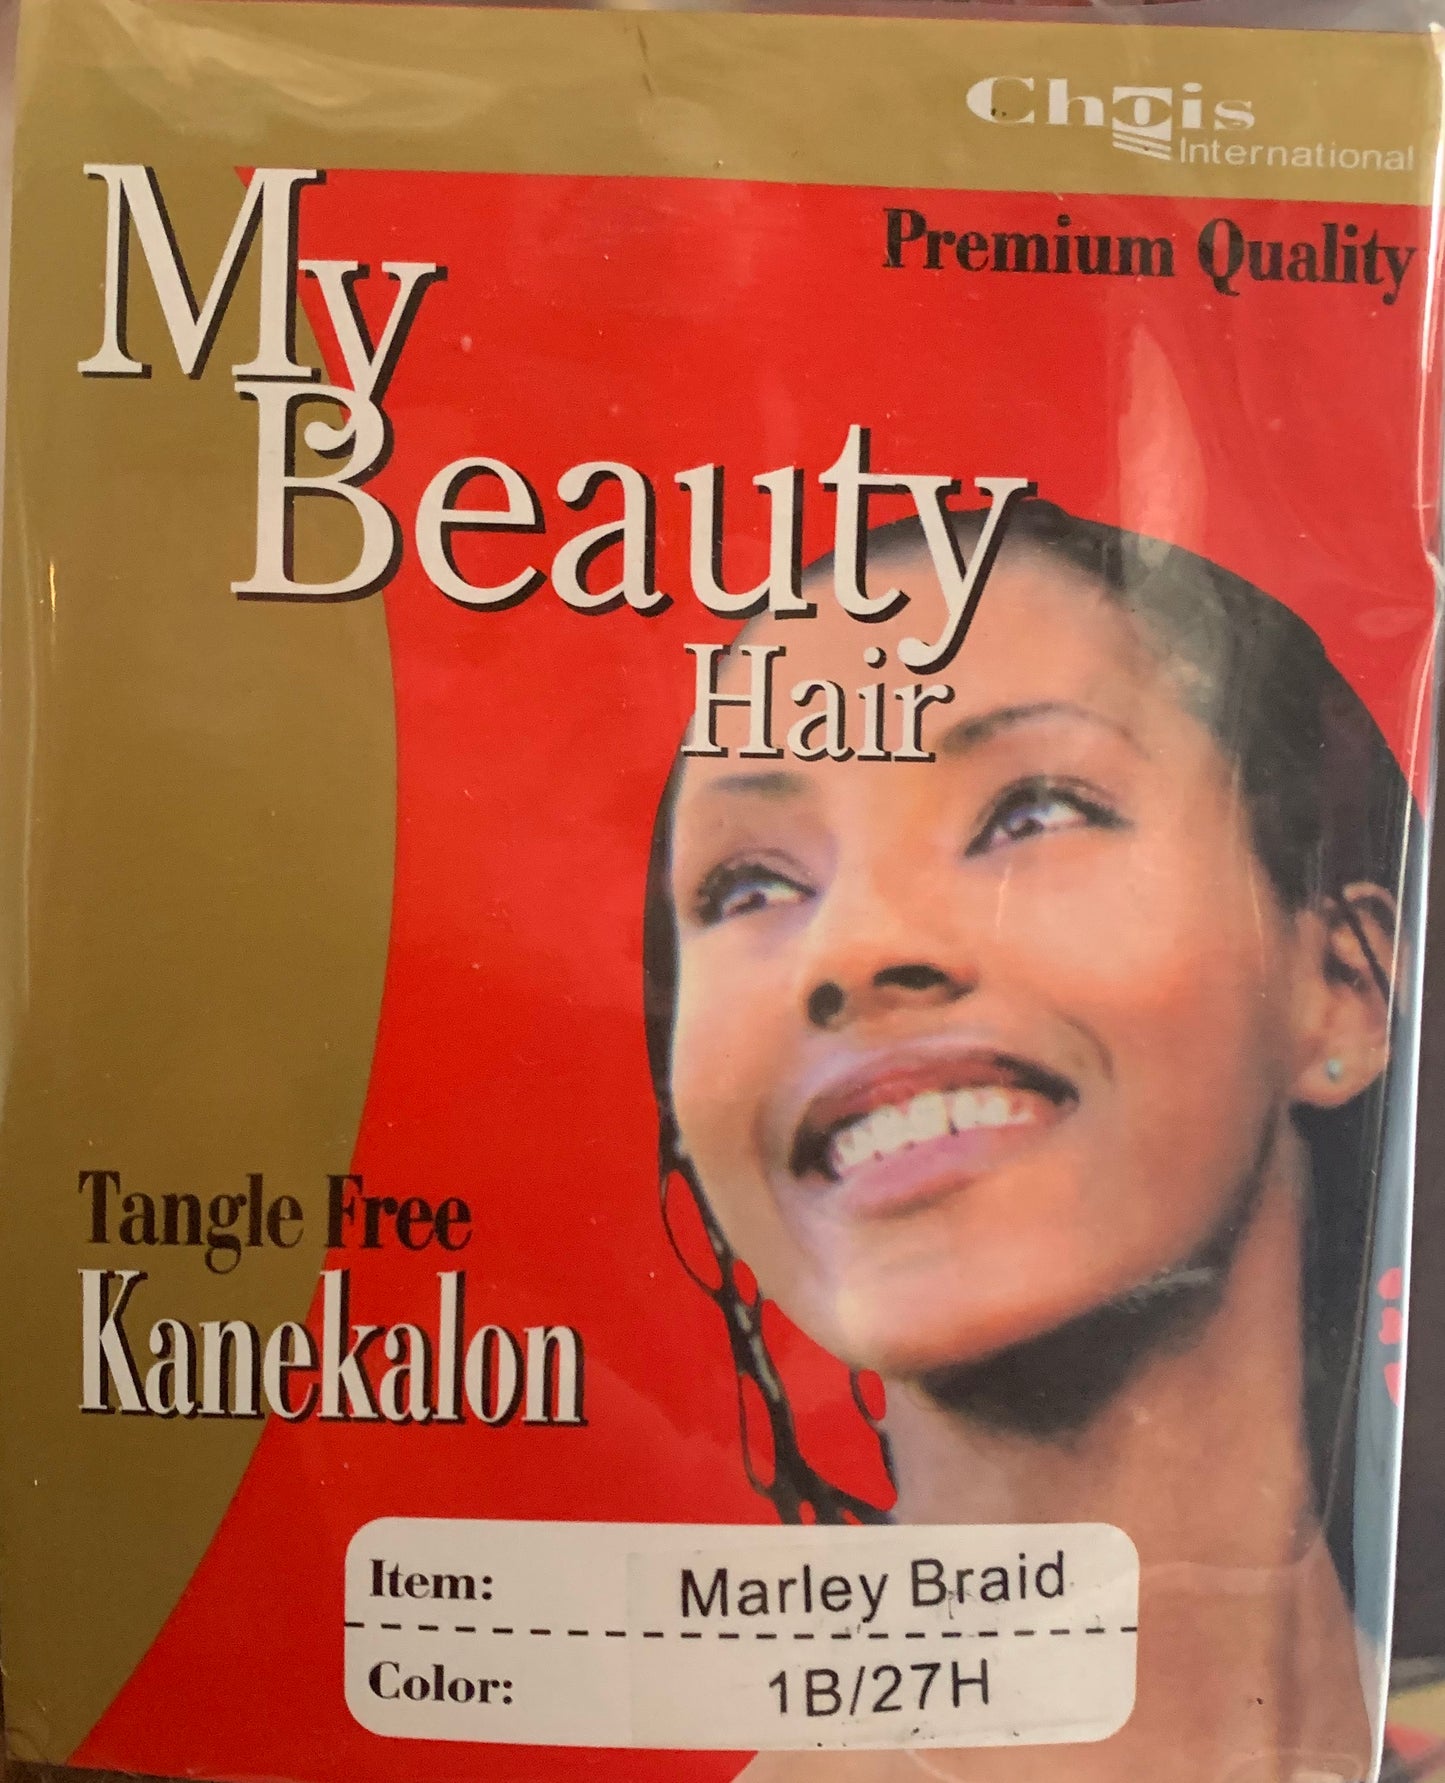 My Beauty Hair: Marley Braid